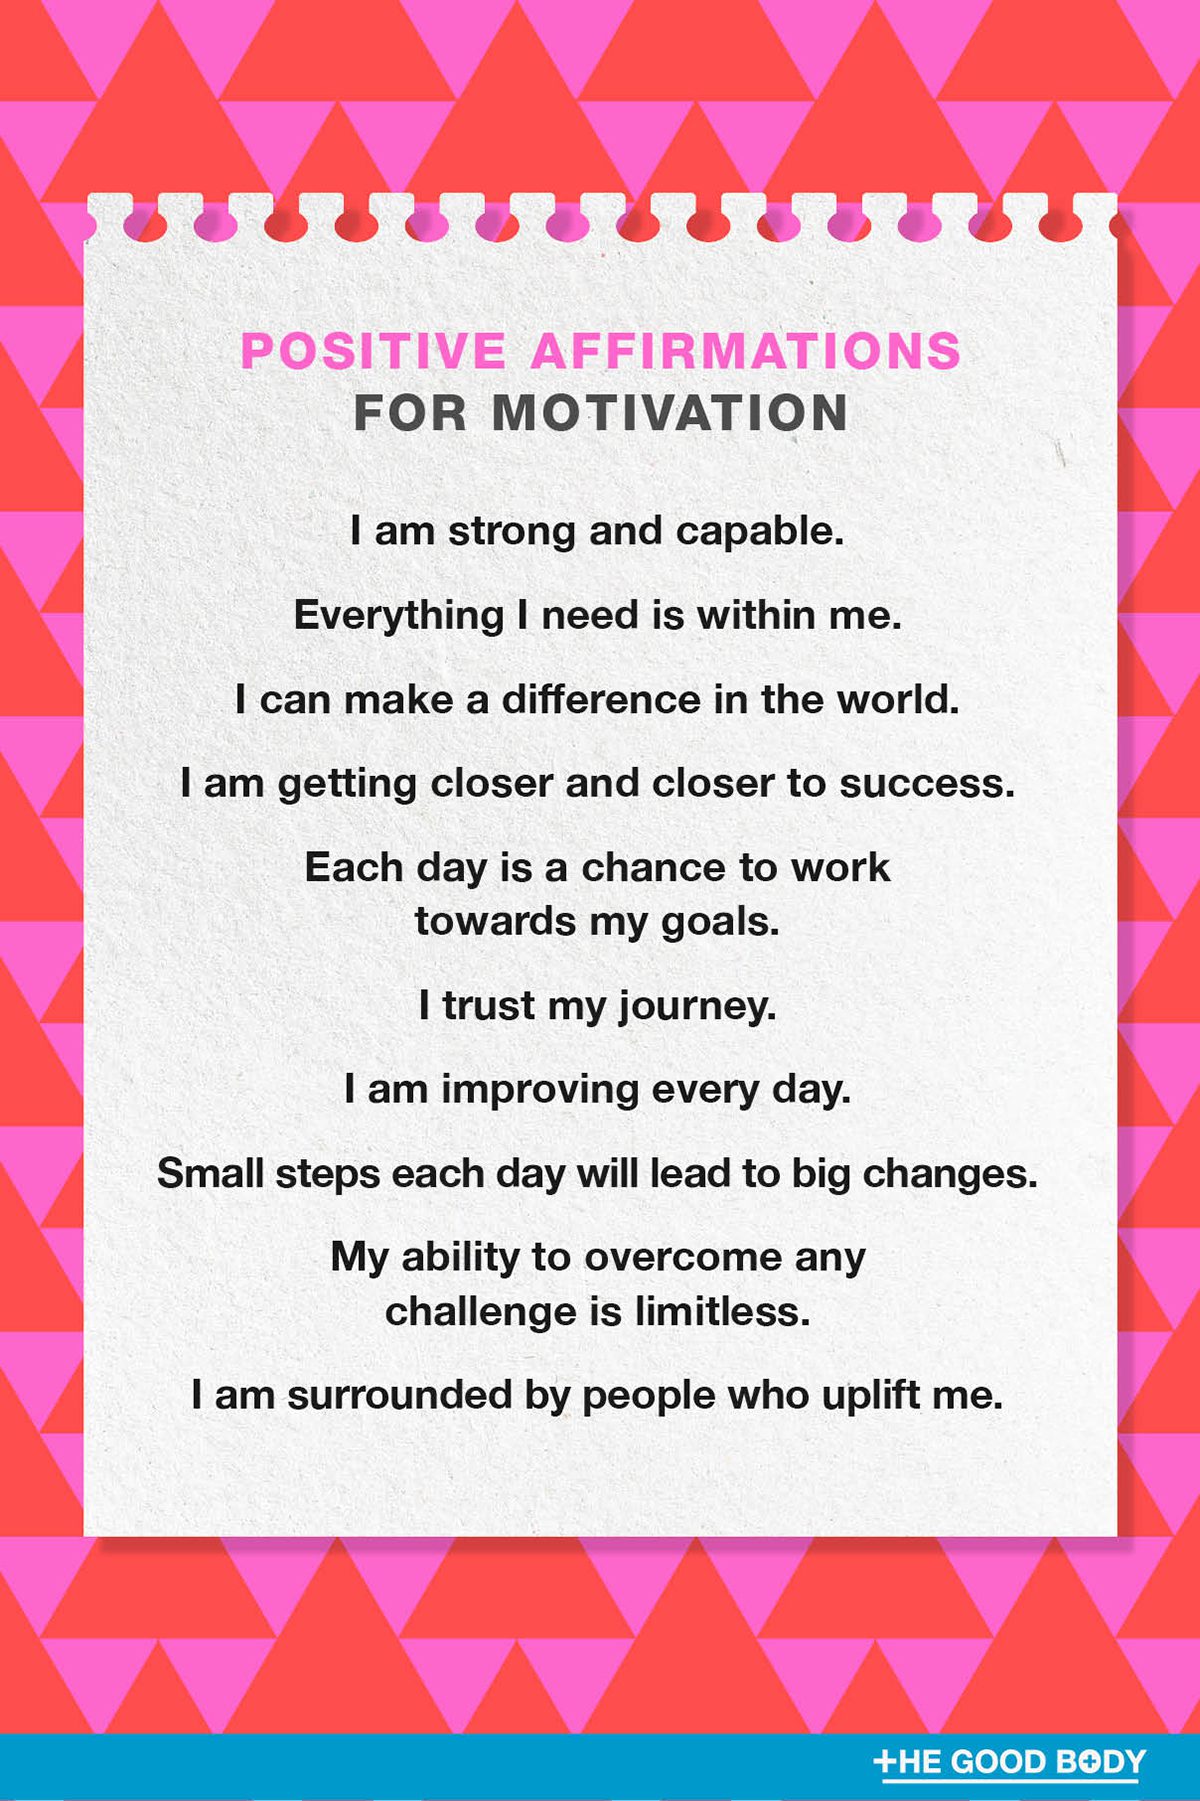 10 Positive Affirmations for Motivation on Notepaper Set Against Triangle Pattern Background